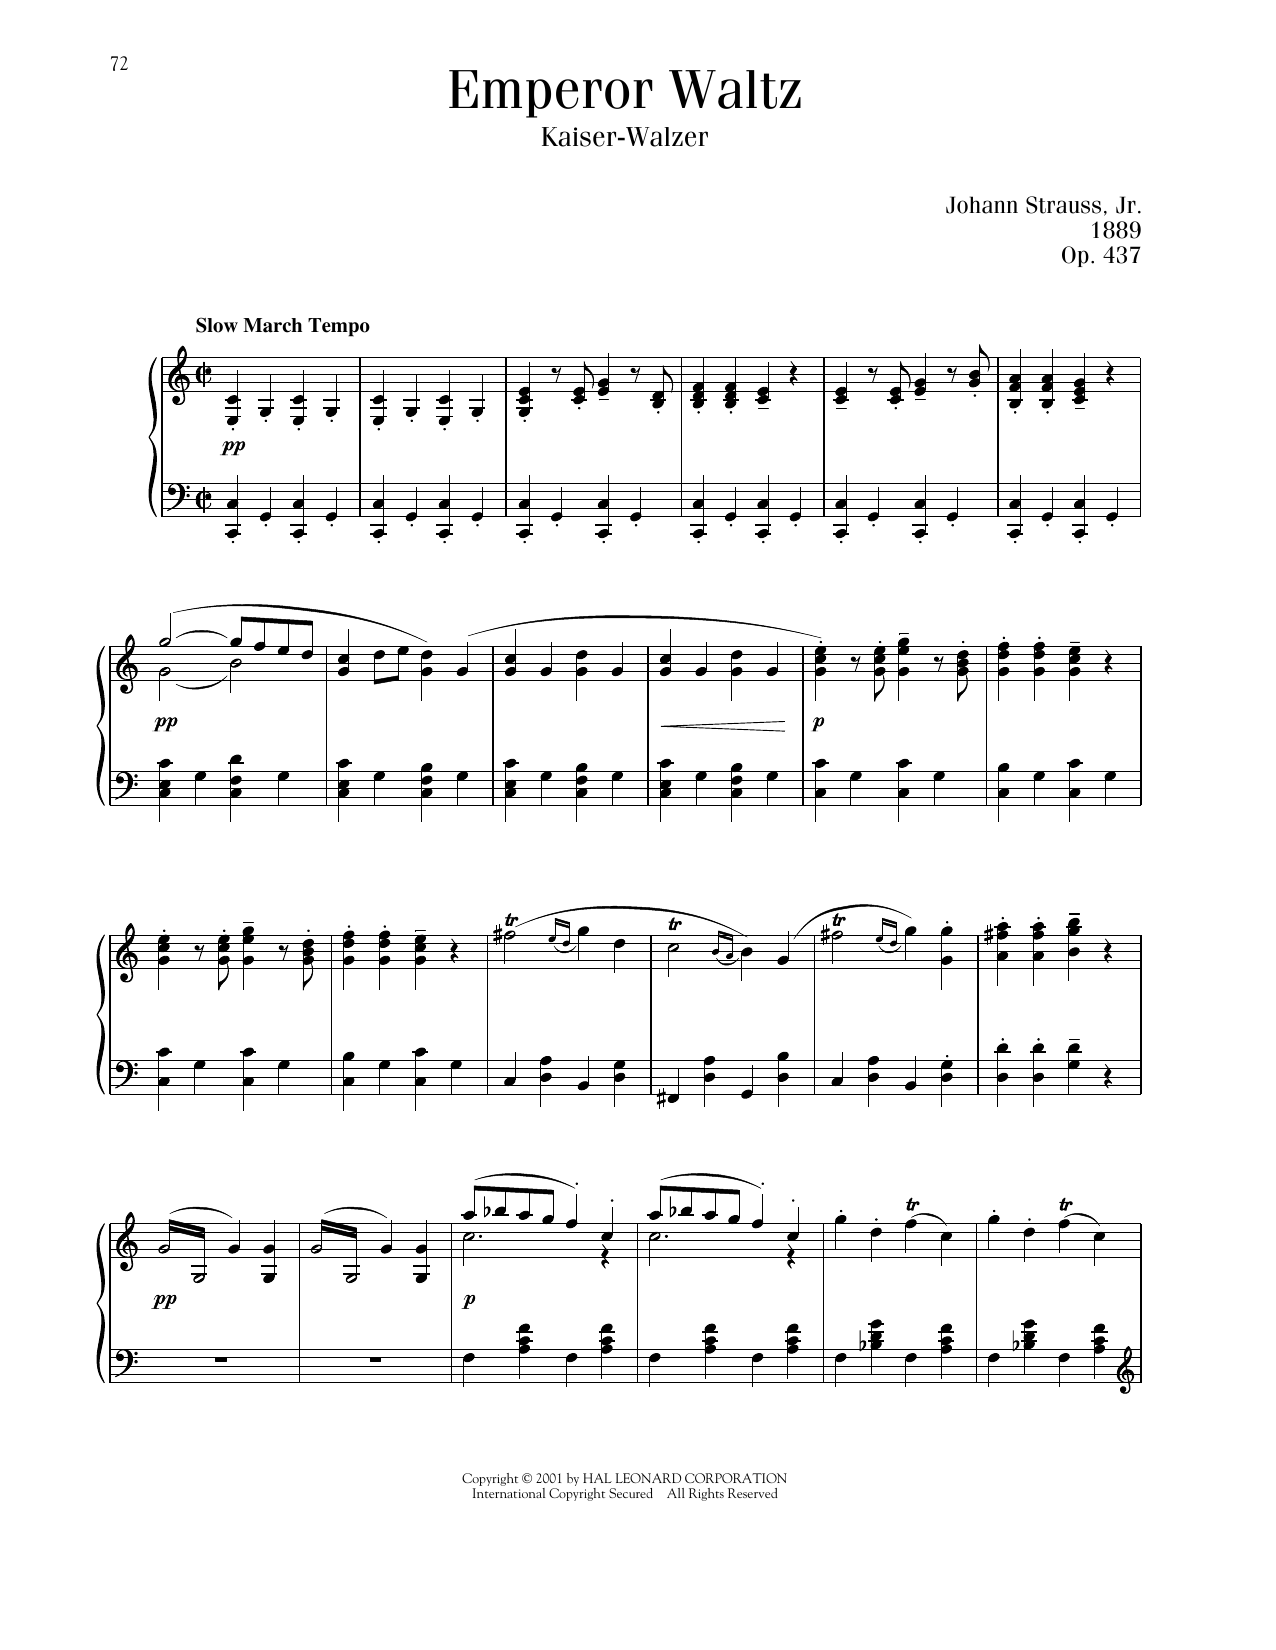 Johann Strauss Emperor Waltz, Op. 437 sheet music notes printable PDF score